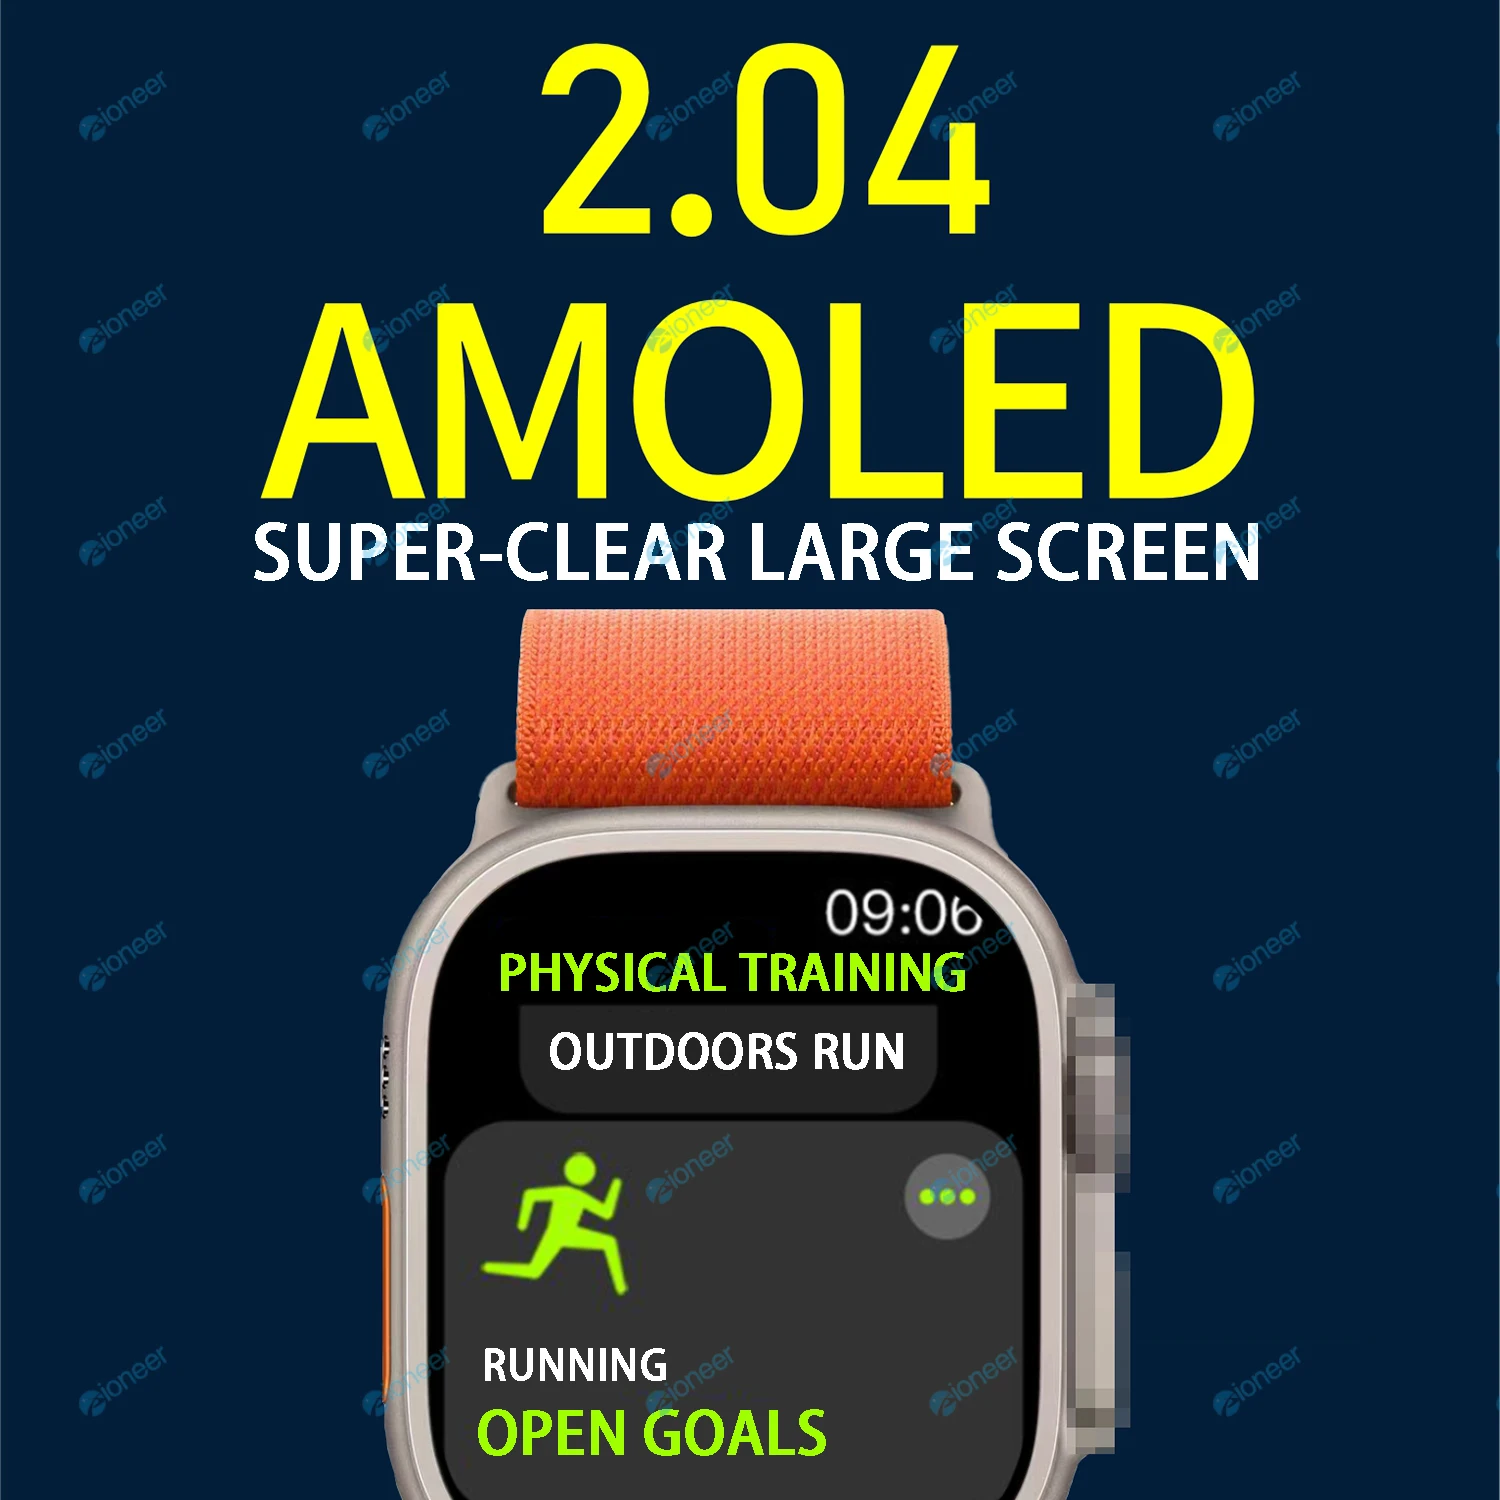  Hello Watch 3 AMOLED - Reloj inteligente para hombre, H11,  ultra actualizado, pantalla completa, de titanio, con brújula NFC, 4 GB de  ROM para Android e iOS (blanco alpino D)